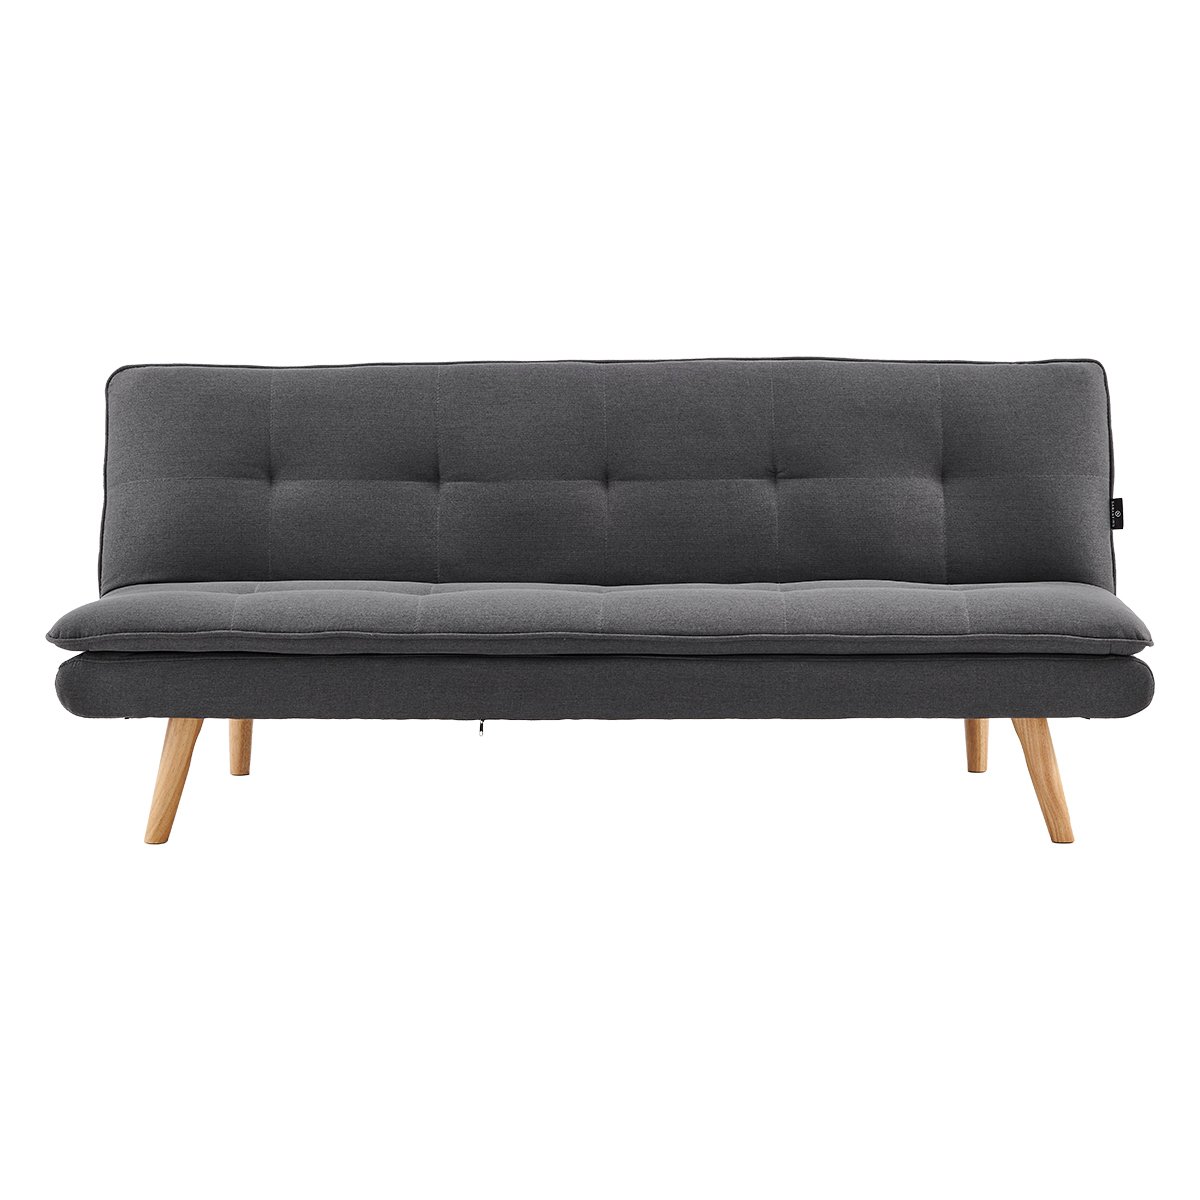 Sarantino 3 Seater Linen Sofa Bed Couch Lounge Futon - Dark Grey 2